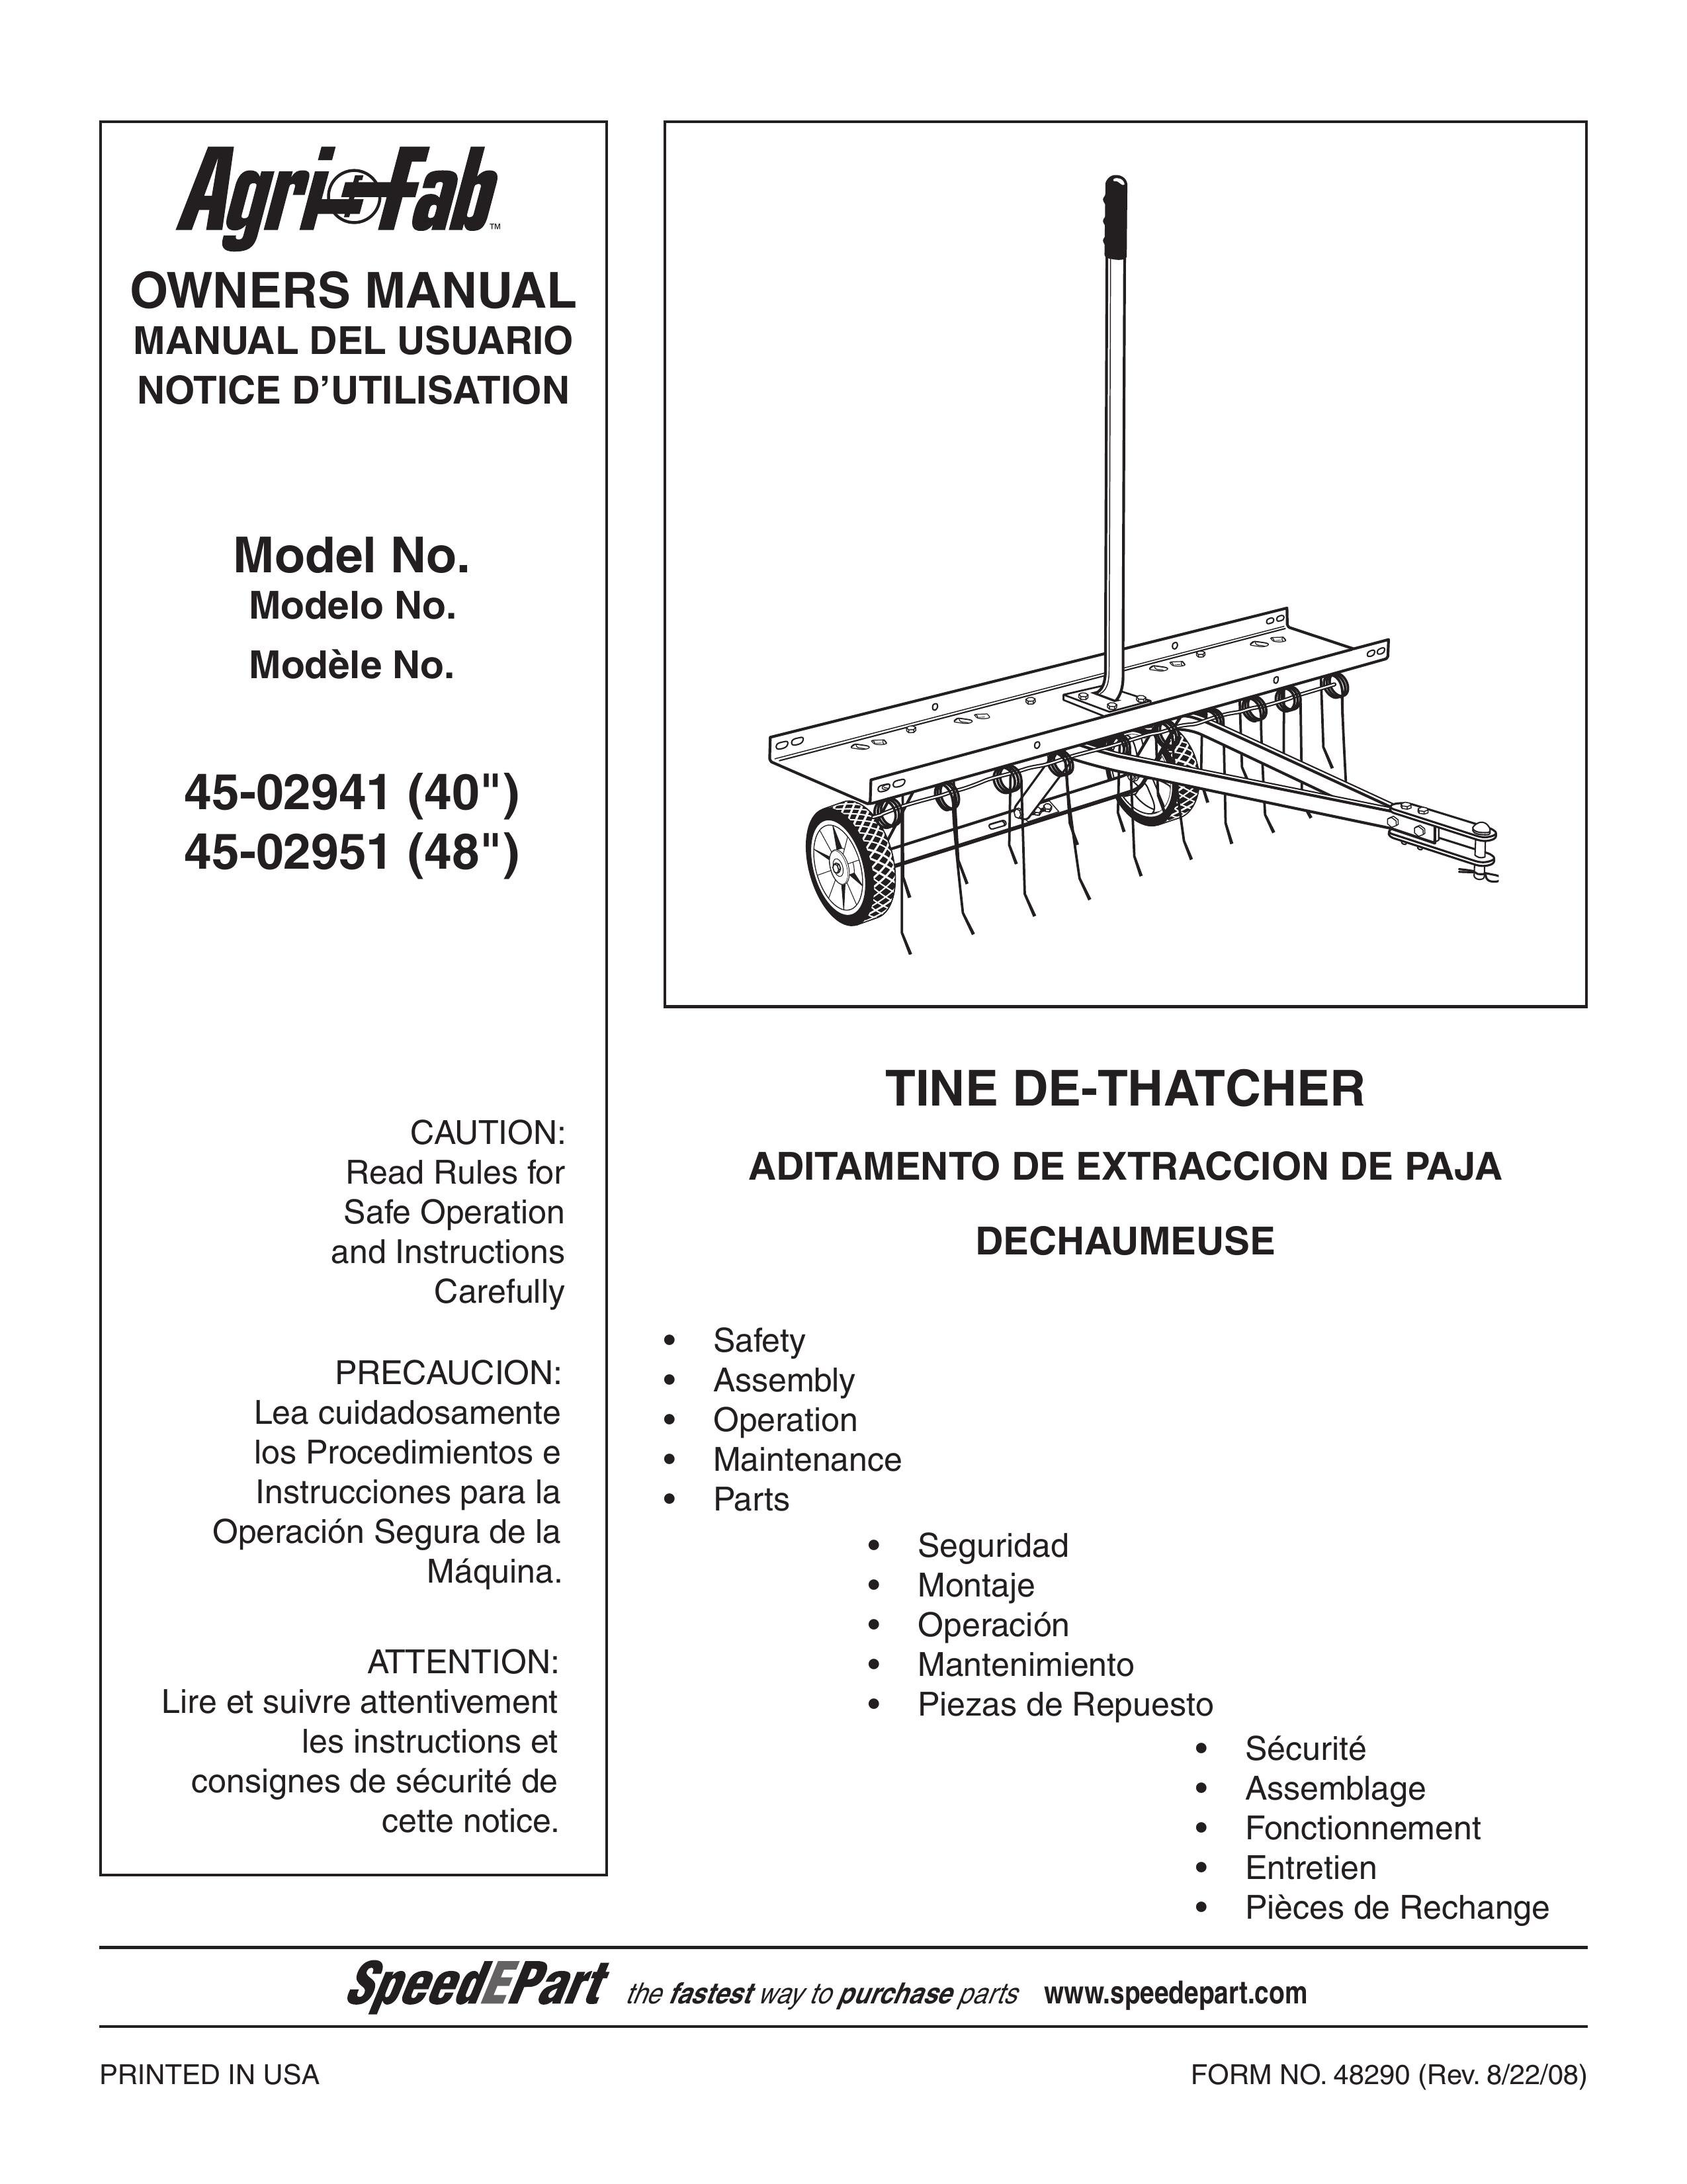 Agri-Fab 45-02941 Lawn Aerator User Manual